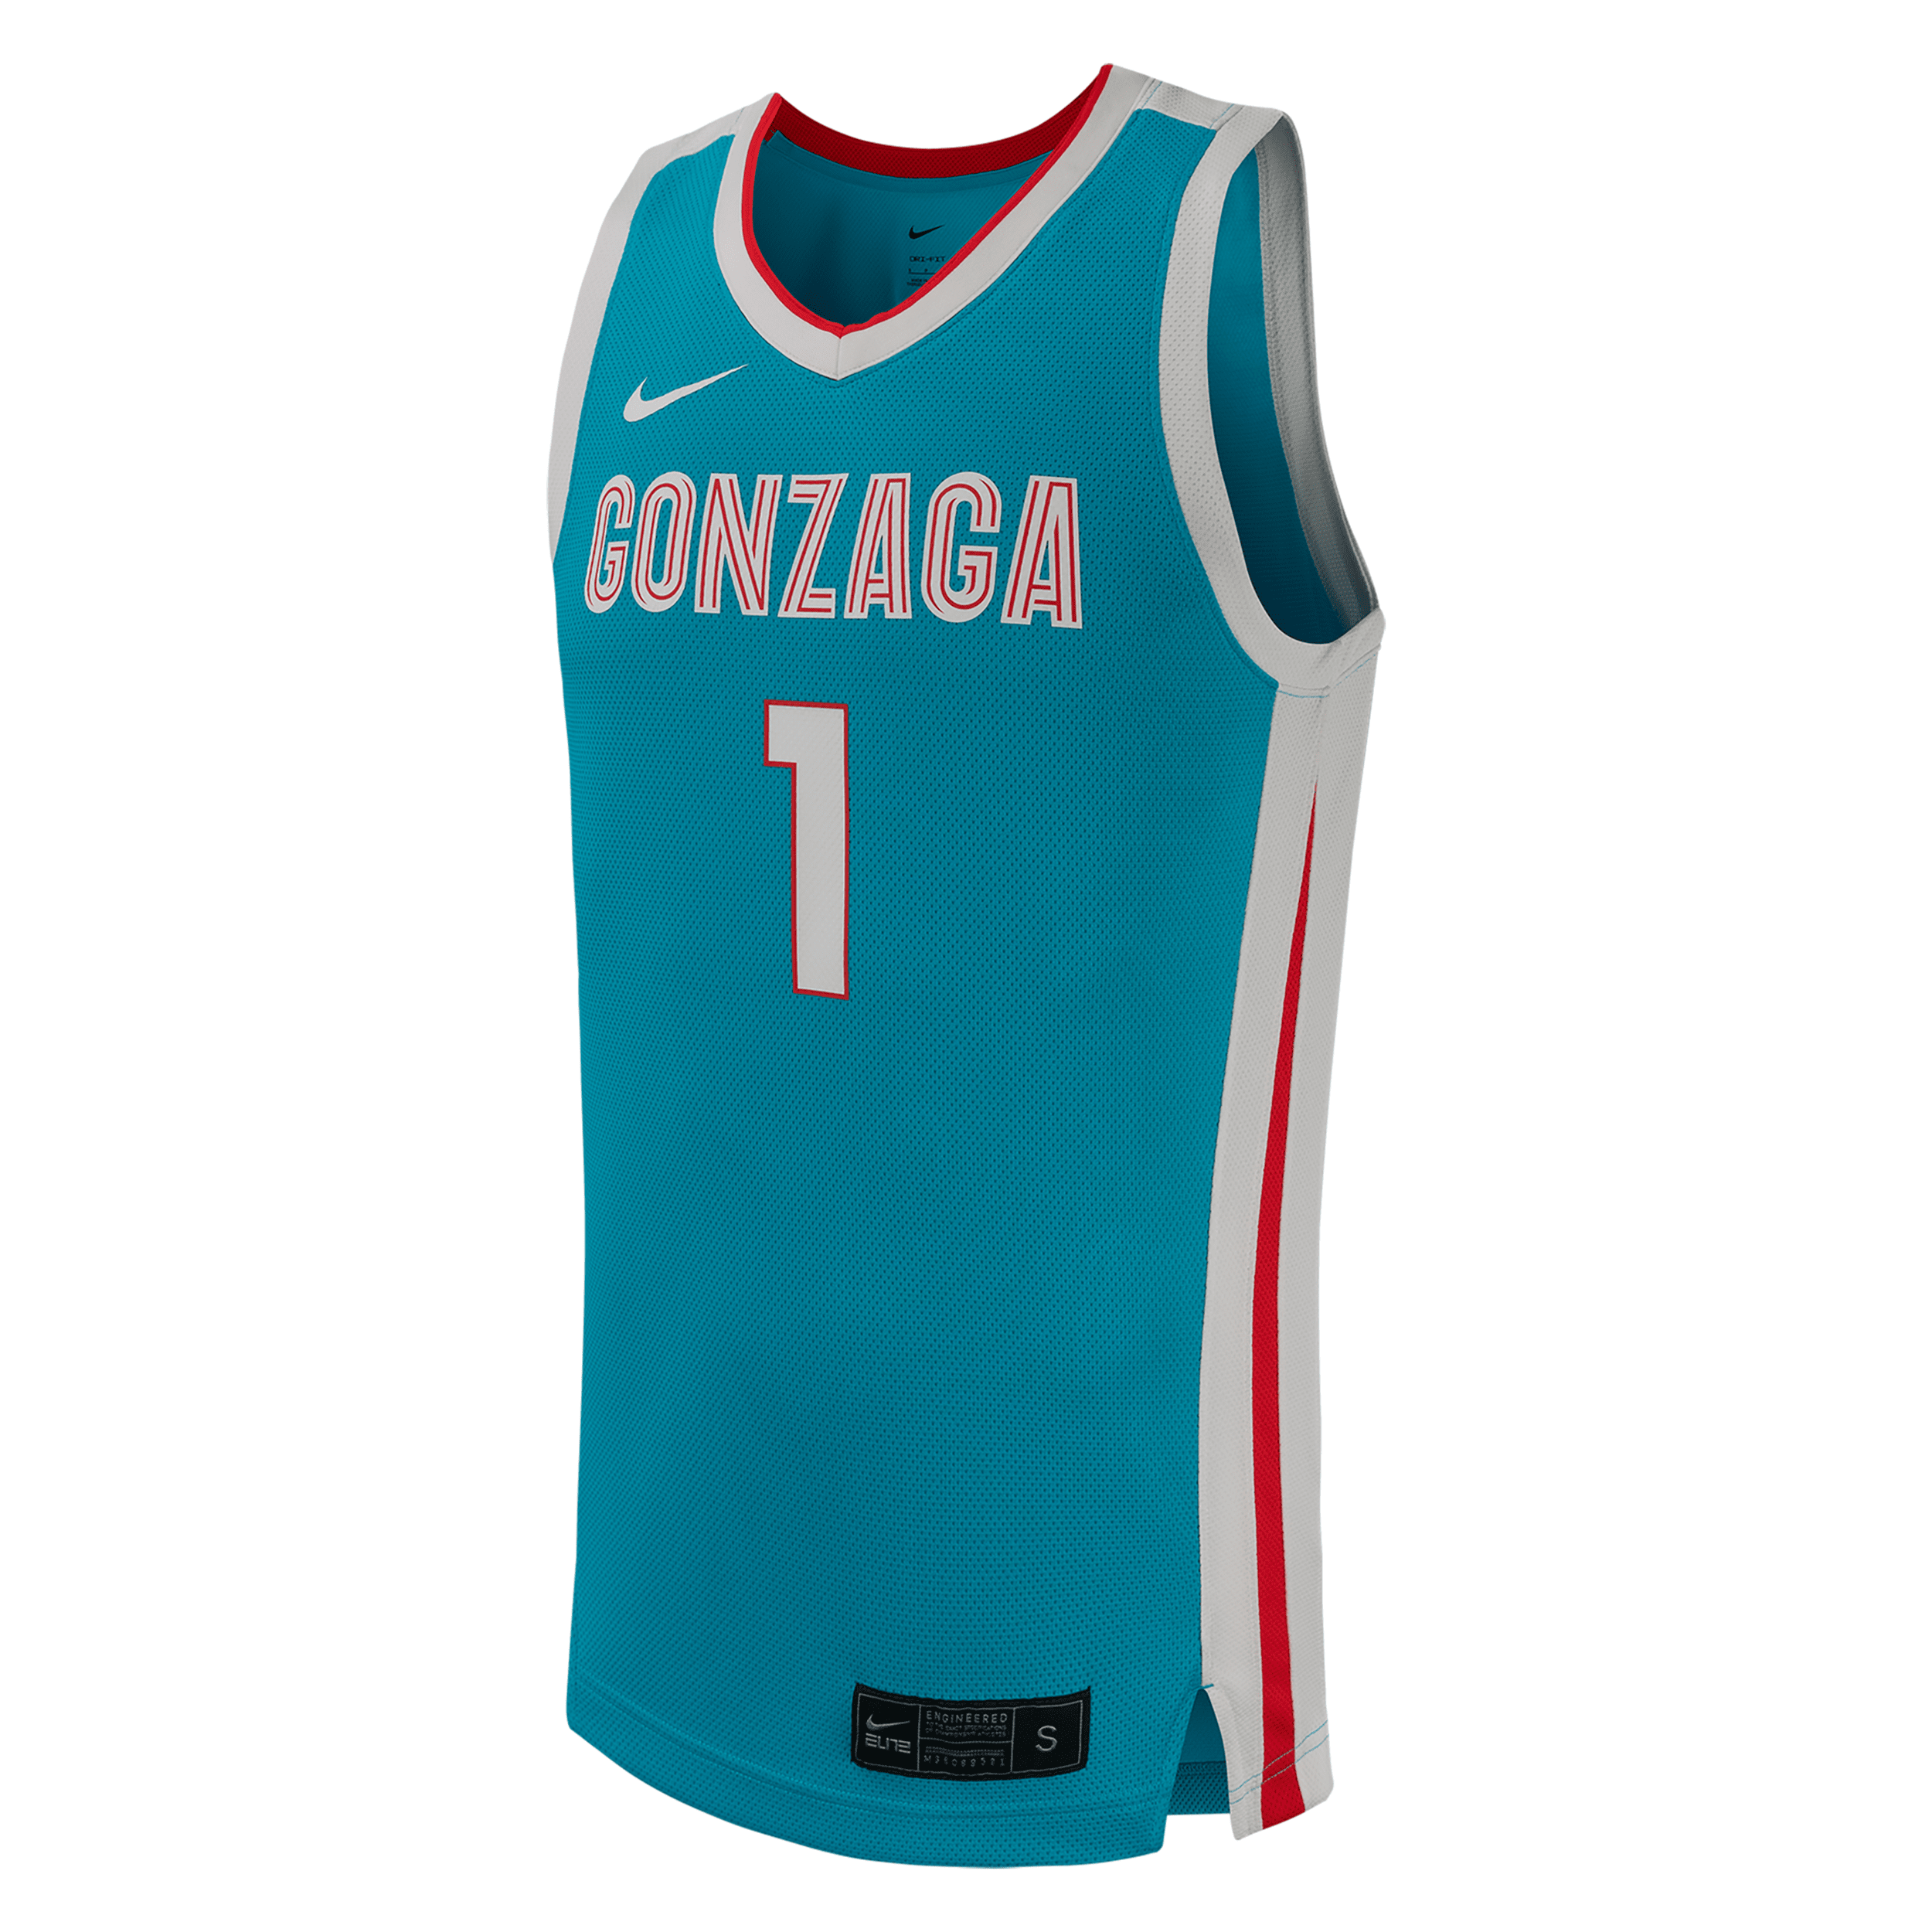 Nike Gonzaga  Men's College Basketball Replica Jersey In Blue